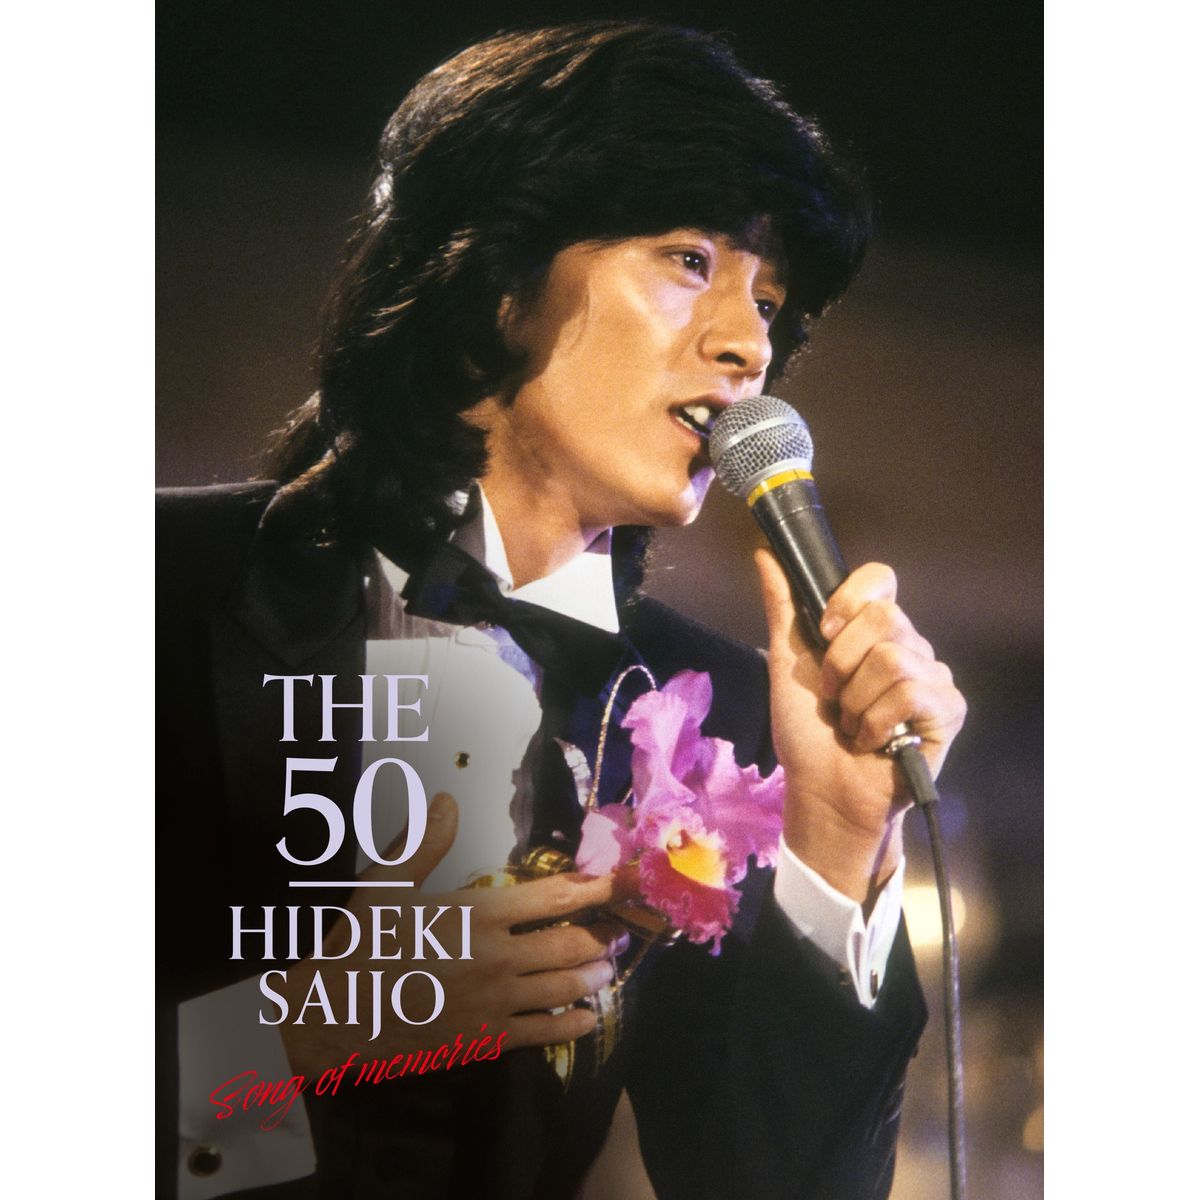 ［在庫限り］【DVD】THE 50 HIDEKI SAIJO song of memories 西城秀樹 7枚組